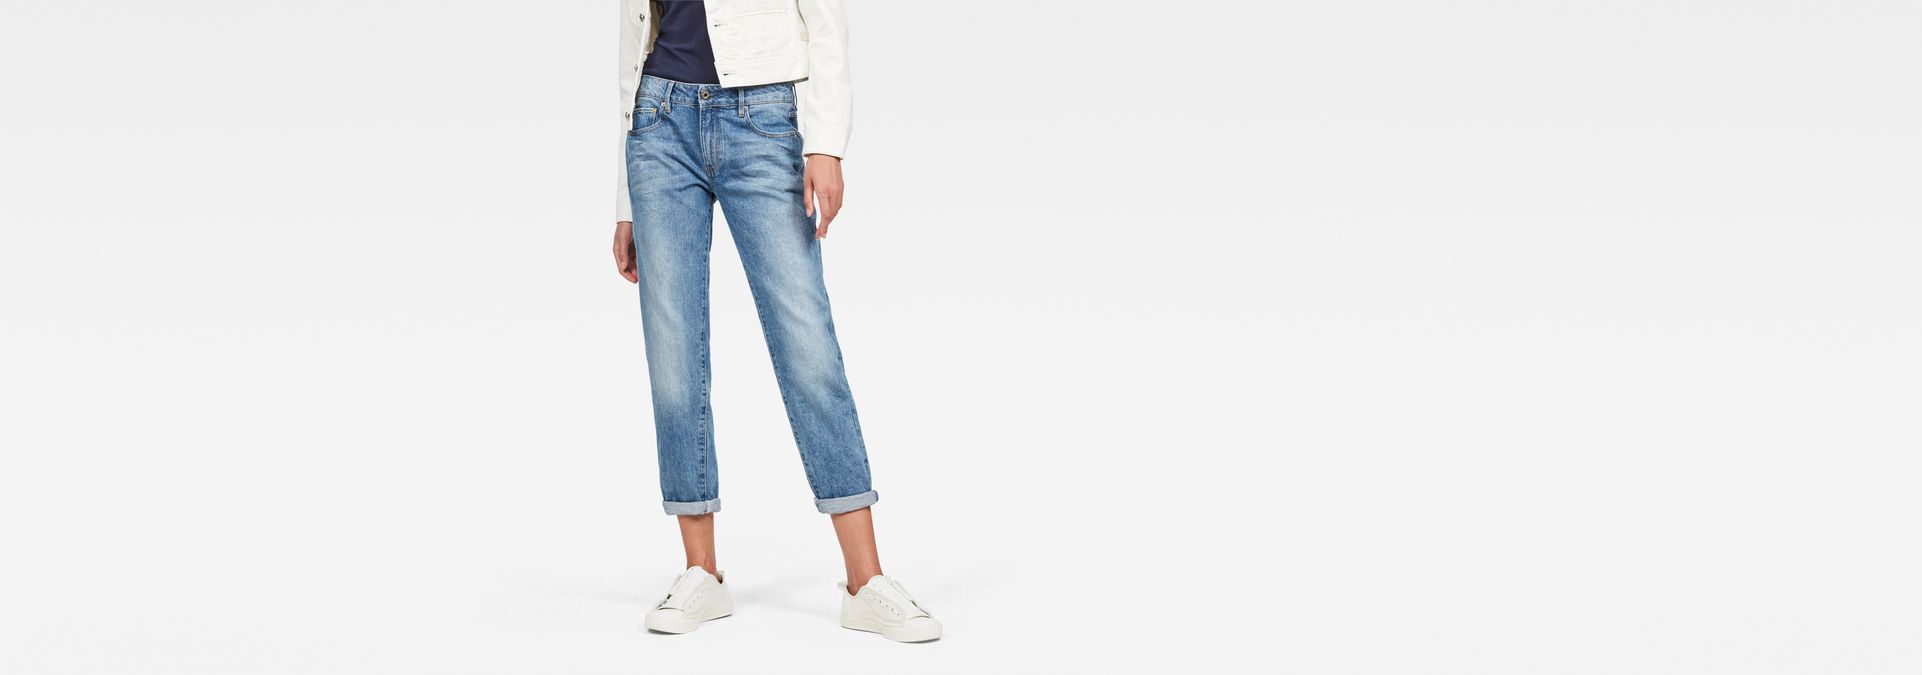 g star boyfriend jeans sale